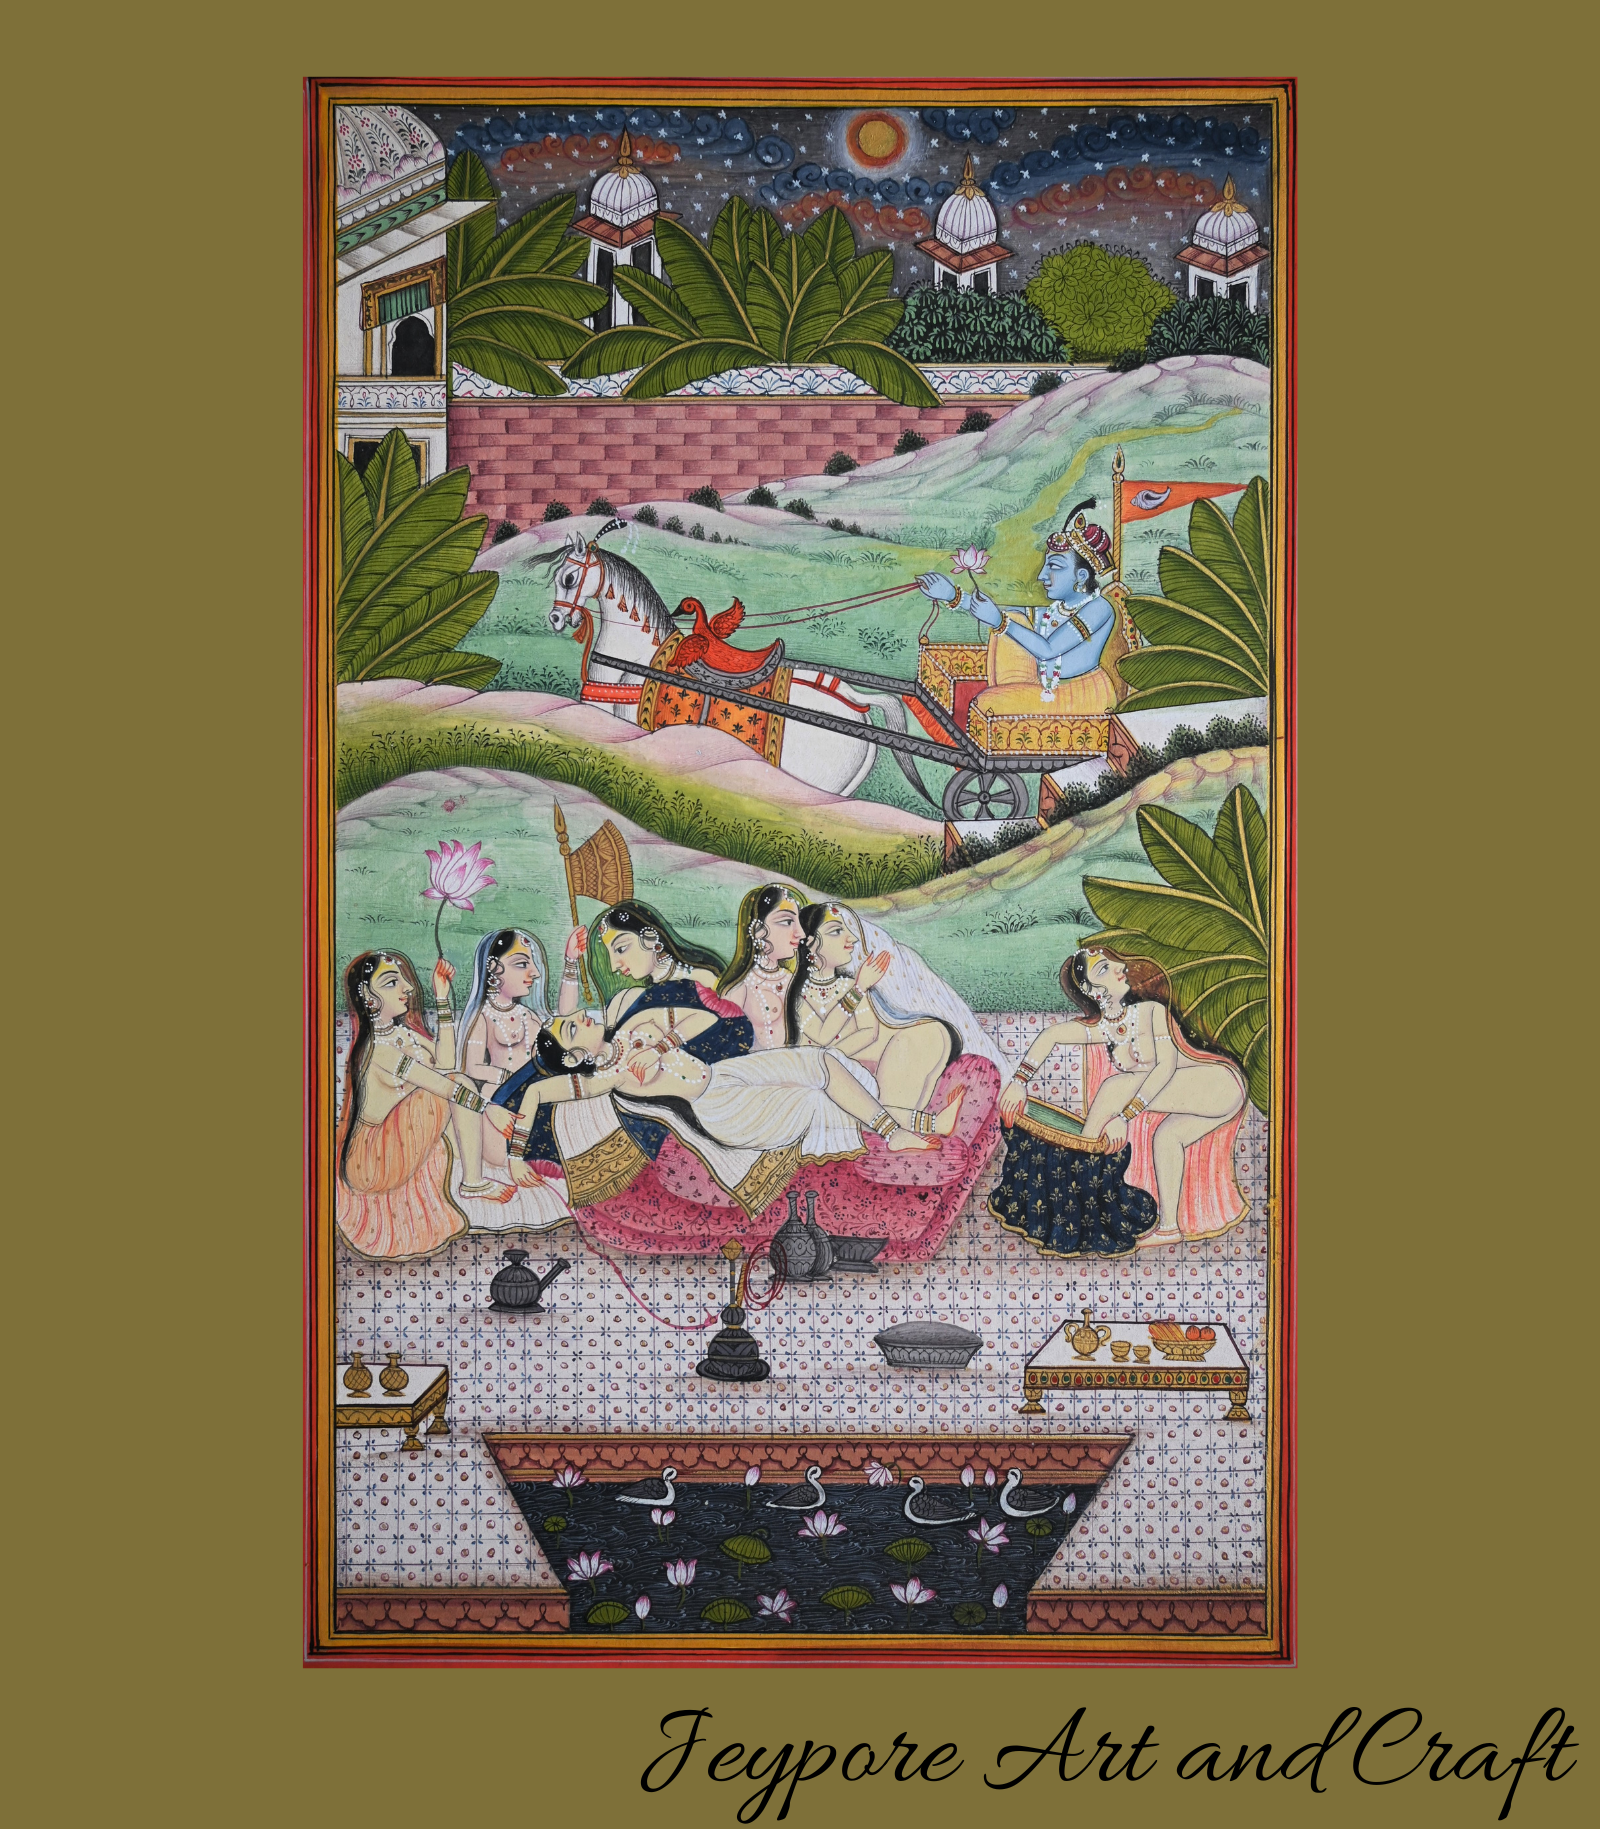 Handmade Indian Village Scene Painting